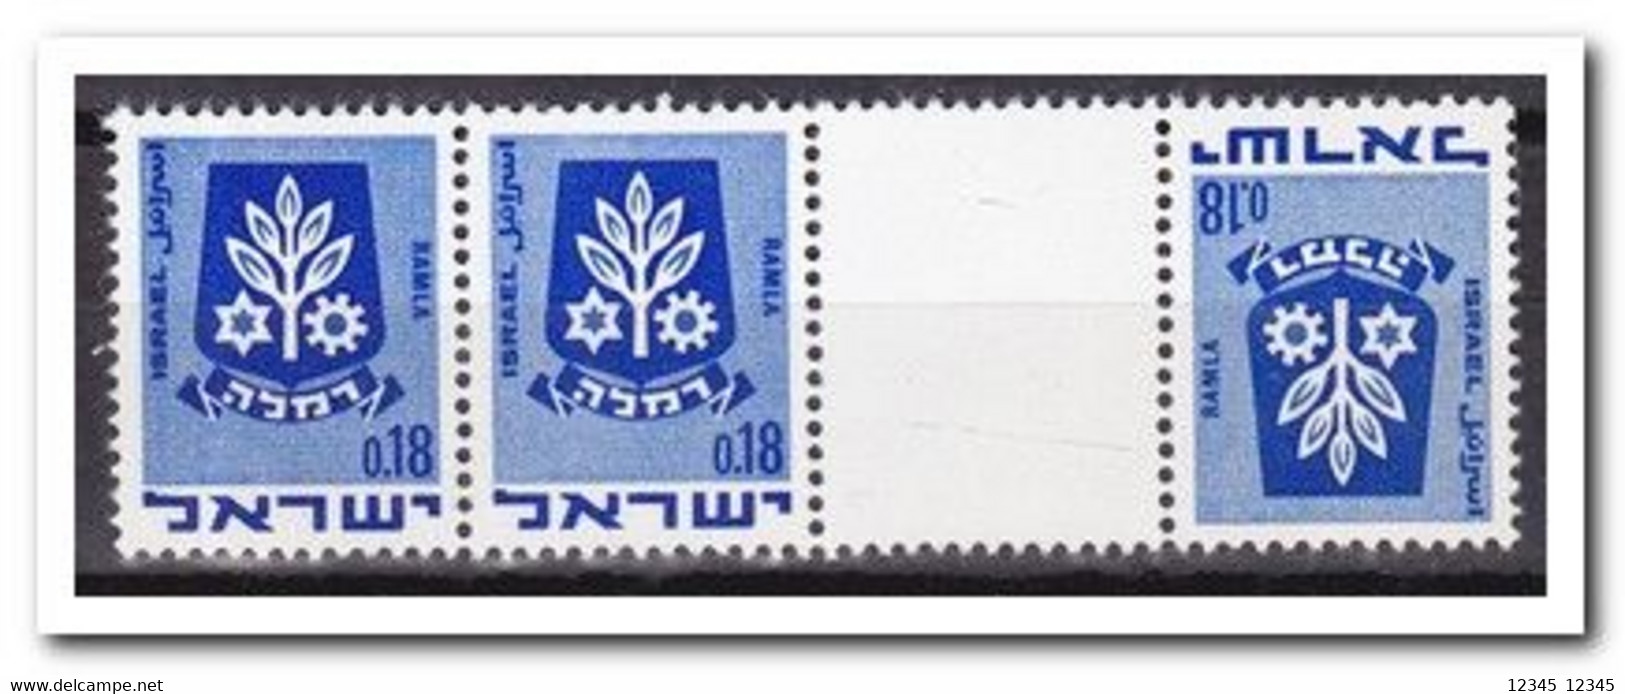 Israël 1973, Postfris MNH, Combinations - Booklets